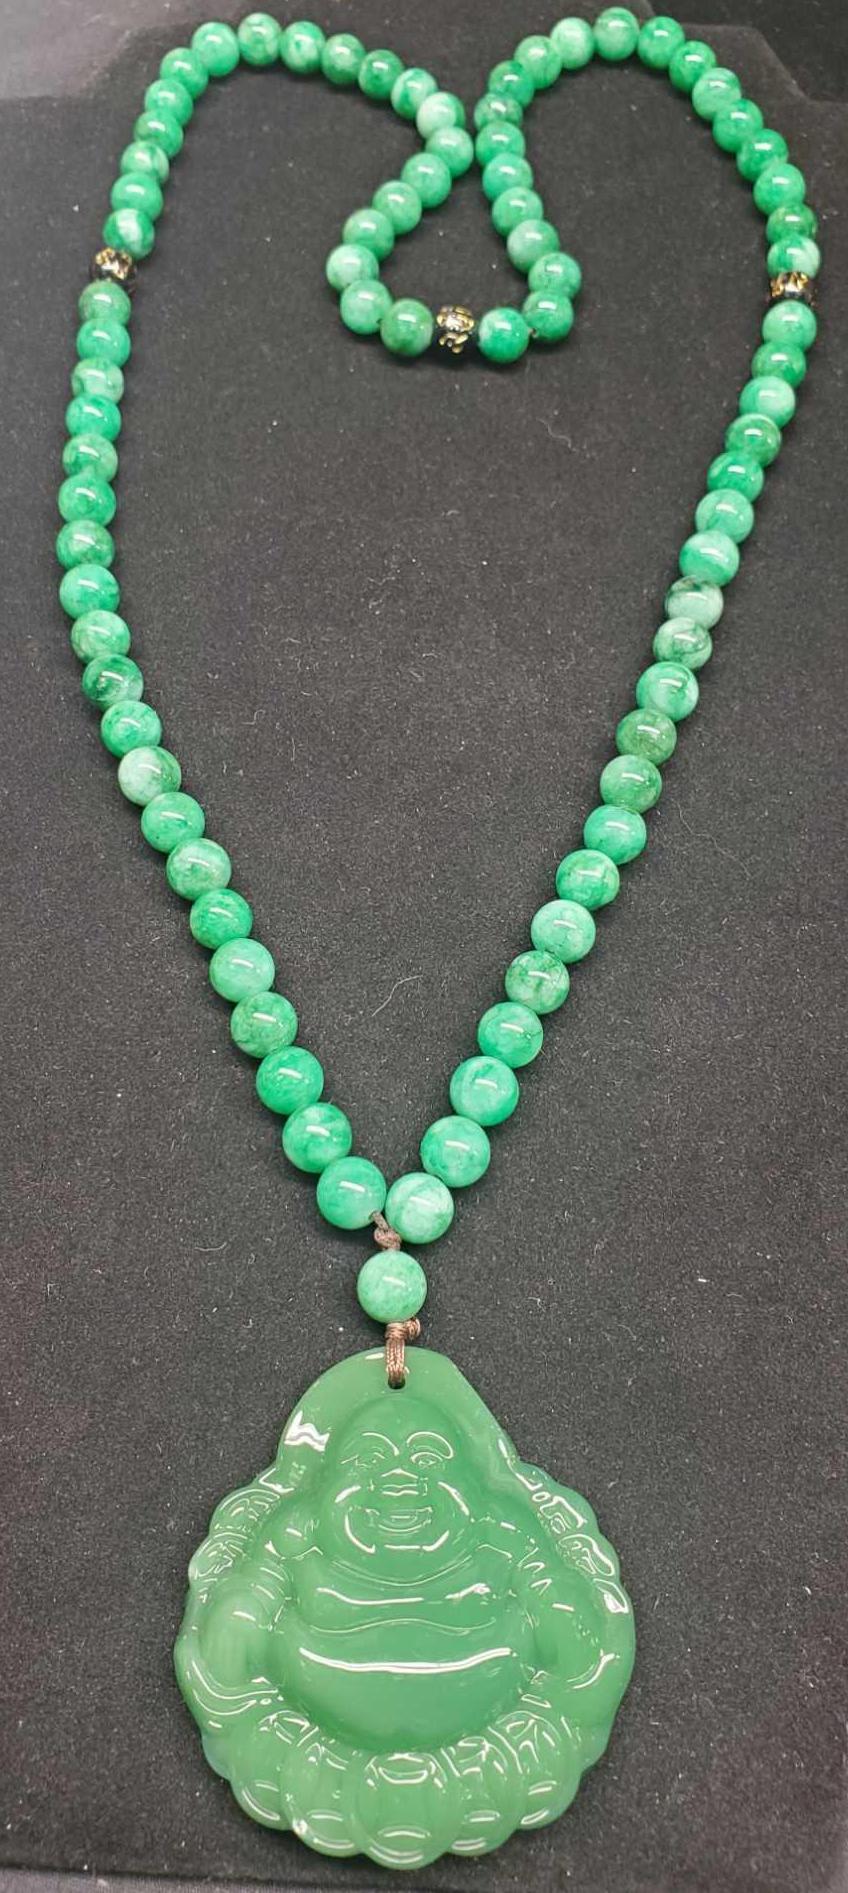 Jade necklace with Buddha pendant